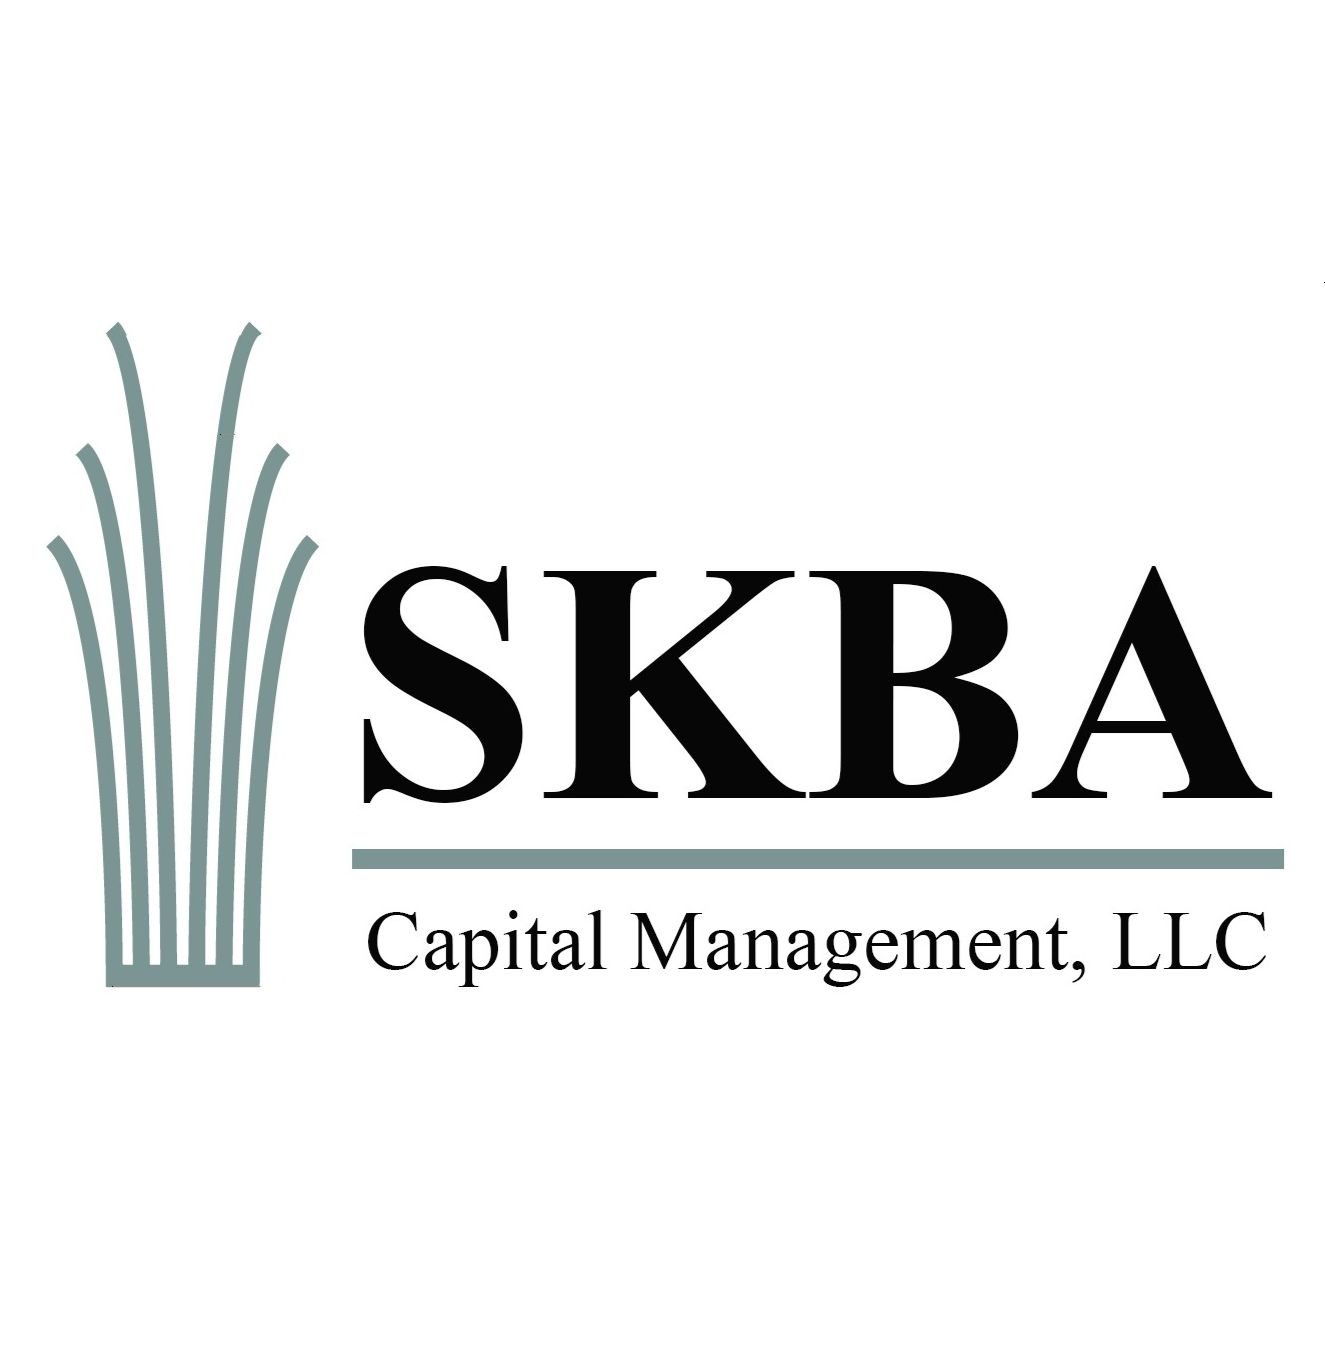 Matthew R. Segura, CFA, is the Director of Institutional Portfolio Management at SKBA Capital Management, LLC.